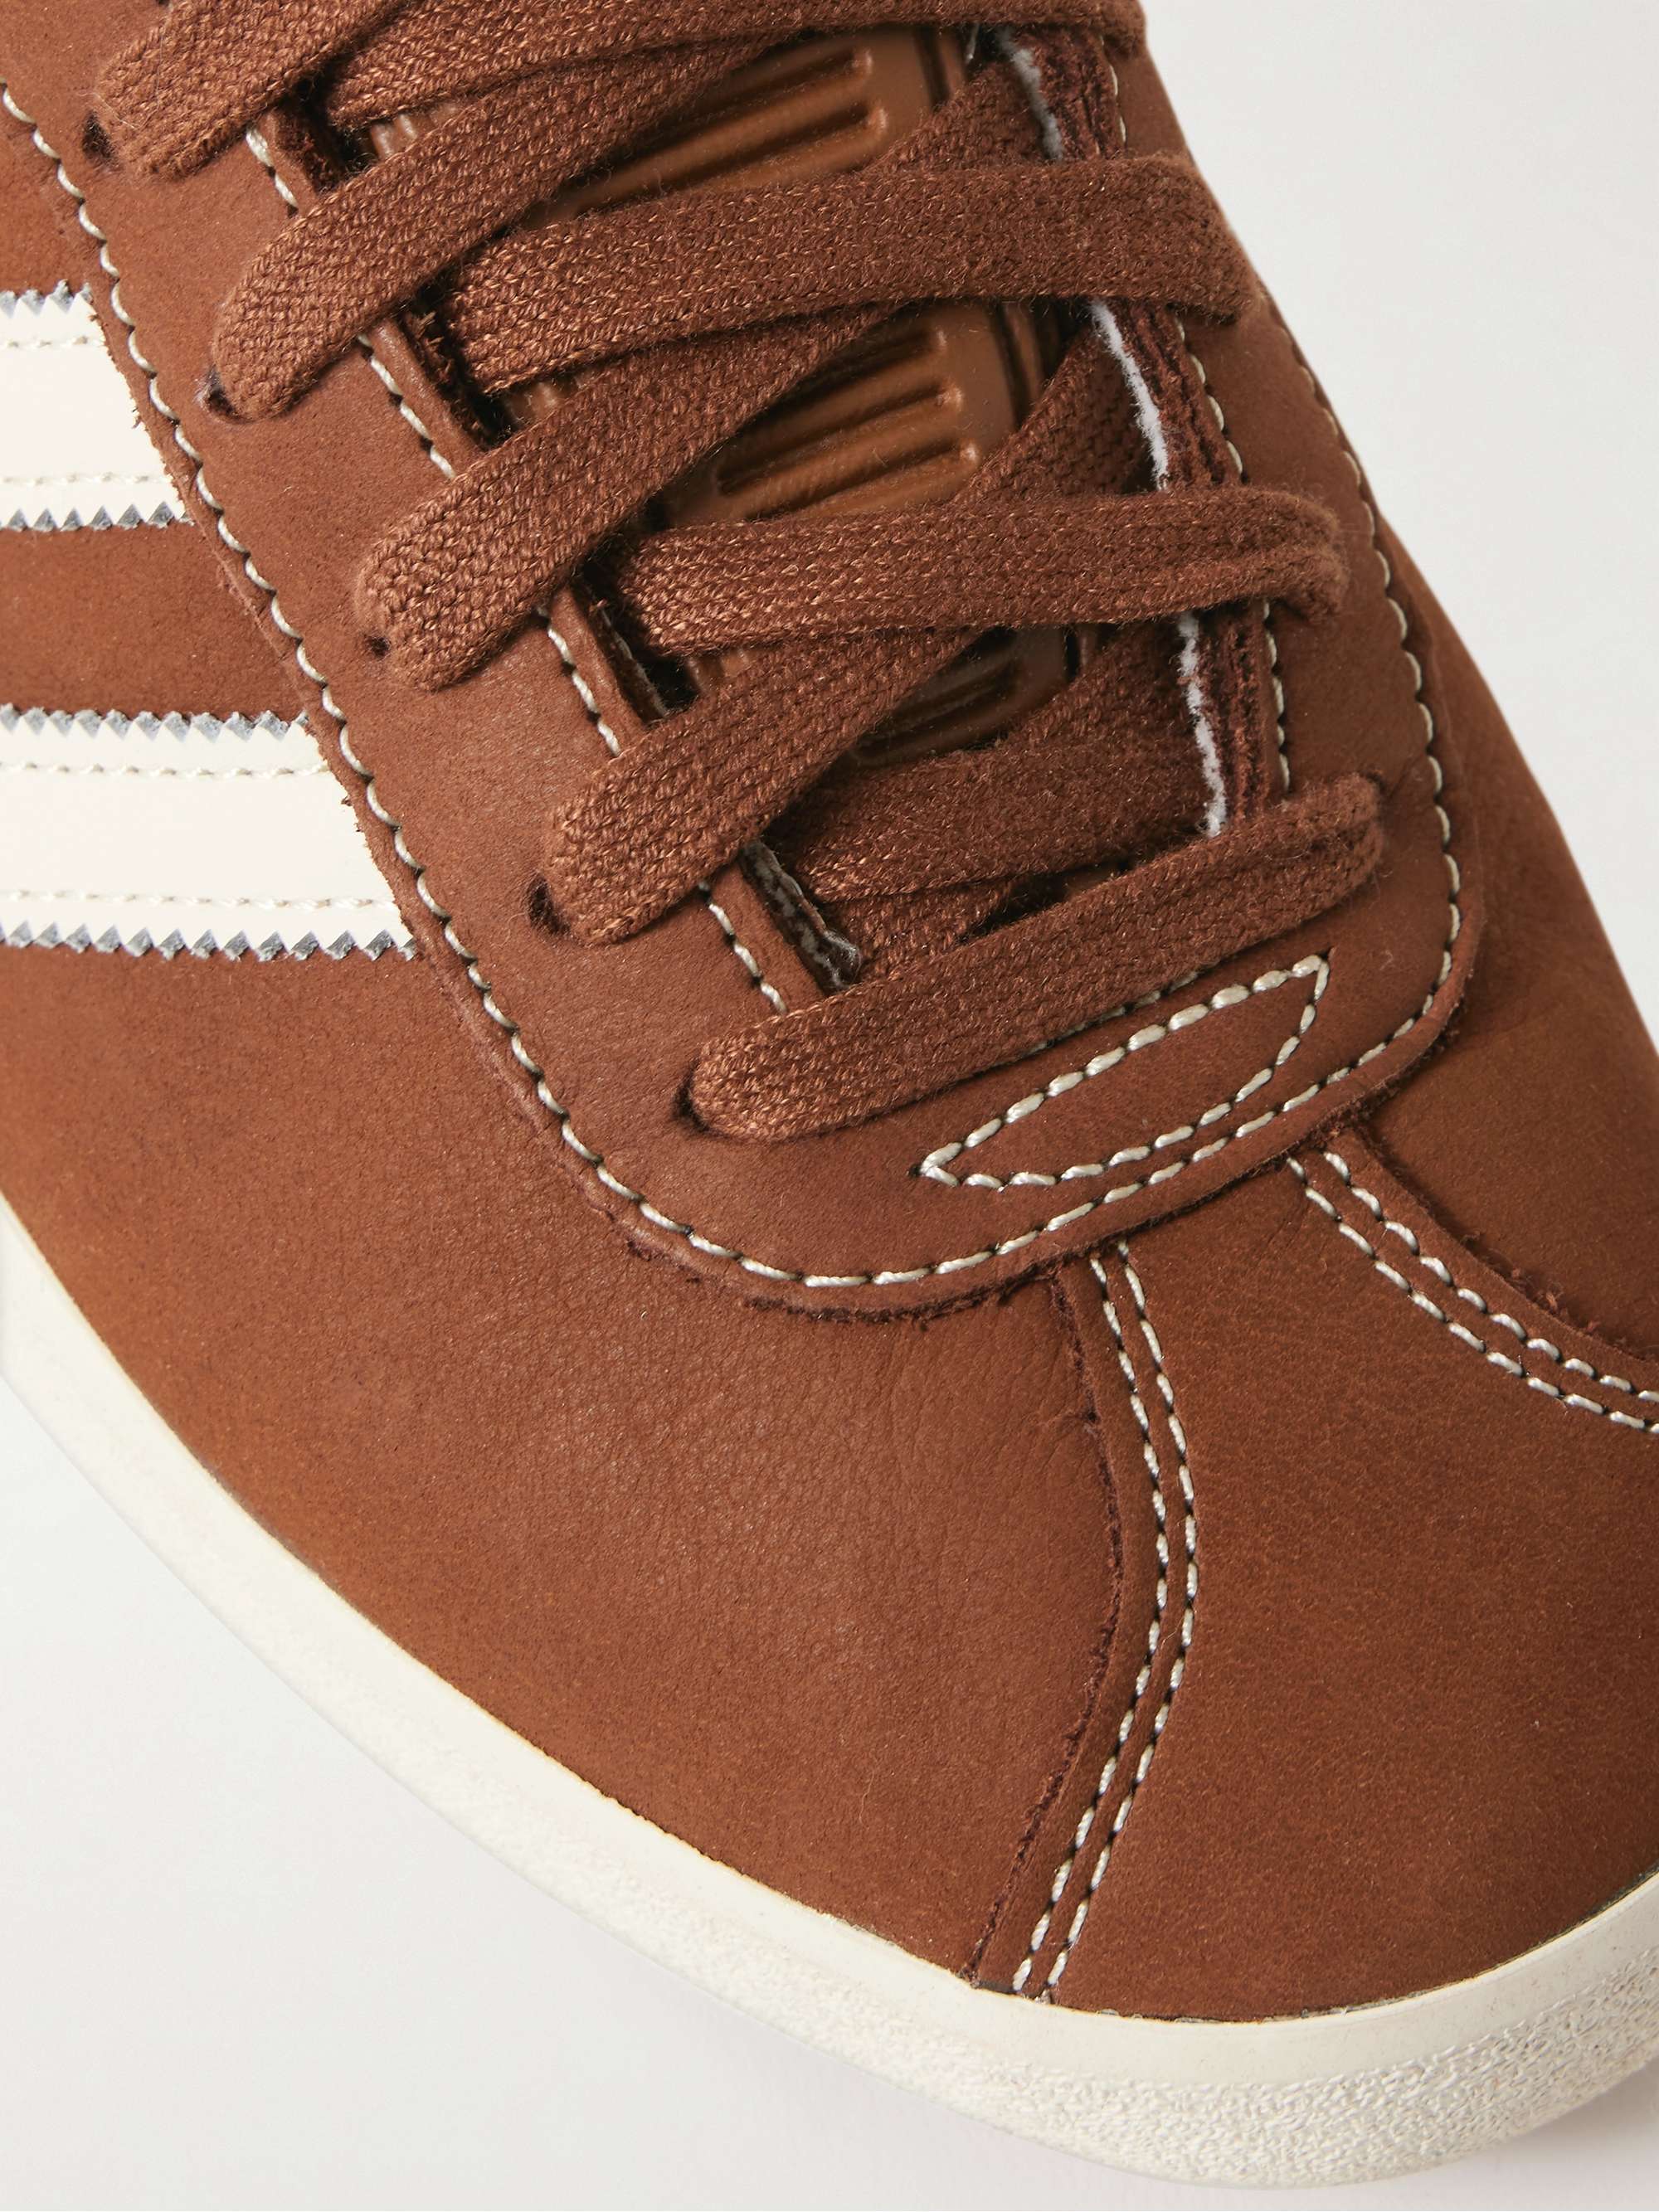 ADIDAS ORIGINALS Gazelle 85 Leather-Trimmed Suede Sneakers for Men | MR  PORTER